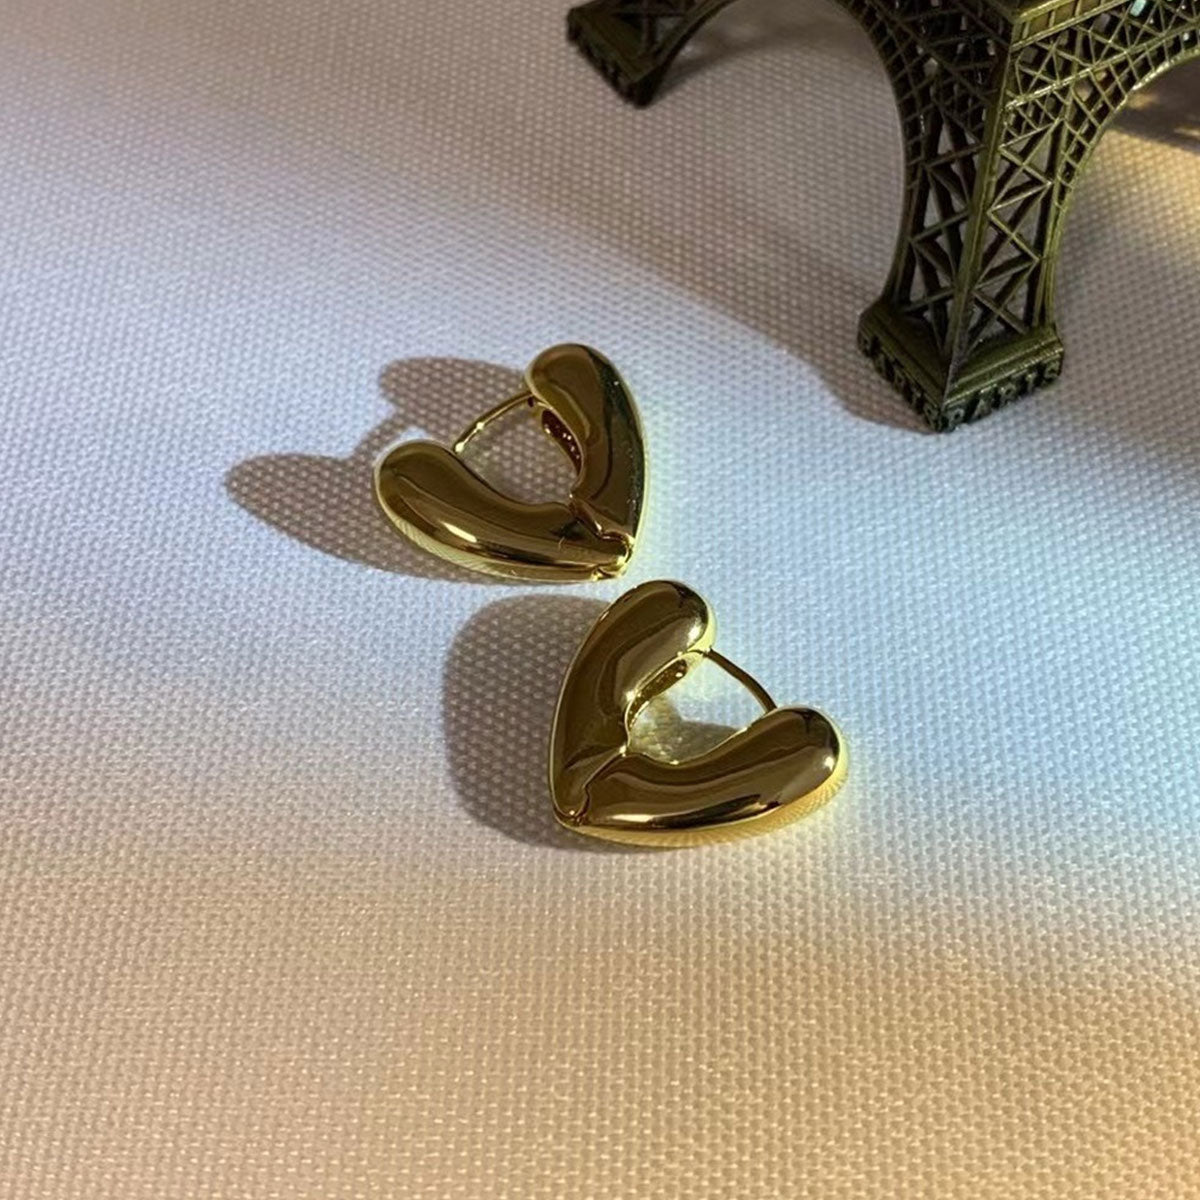 Free Now: Golden Midi Heart Shape Chunky Hoop Earrings